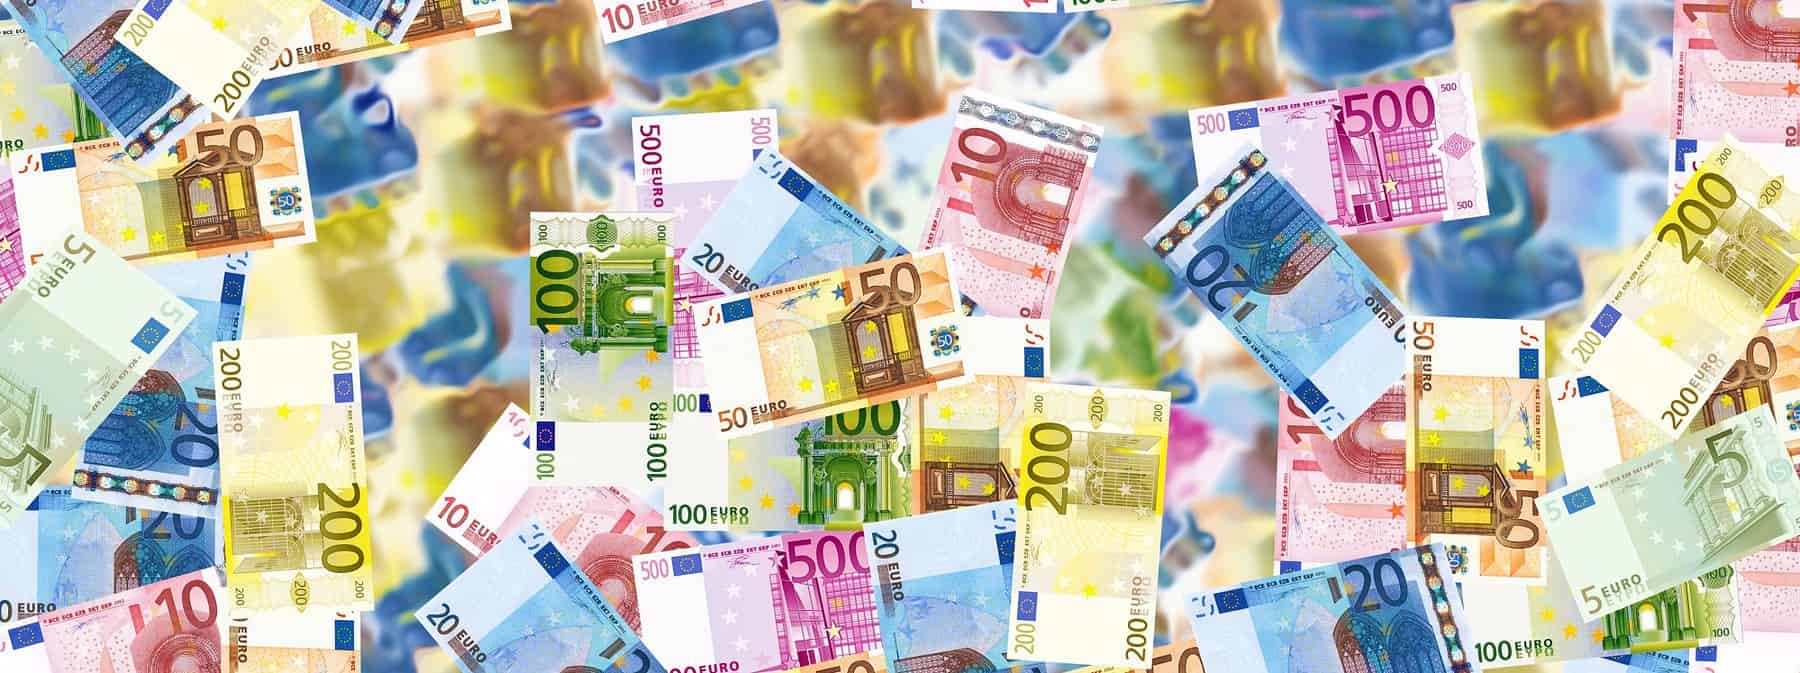 A collection of Euro bills. Image source: Pixabay user Angelo Luca Iannaccone.